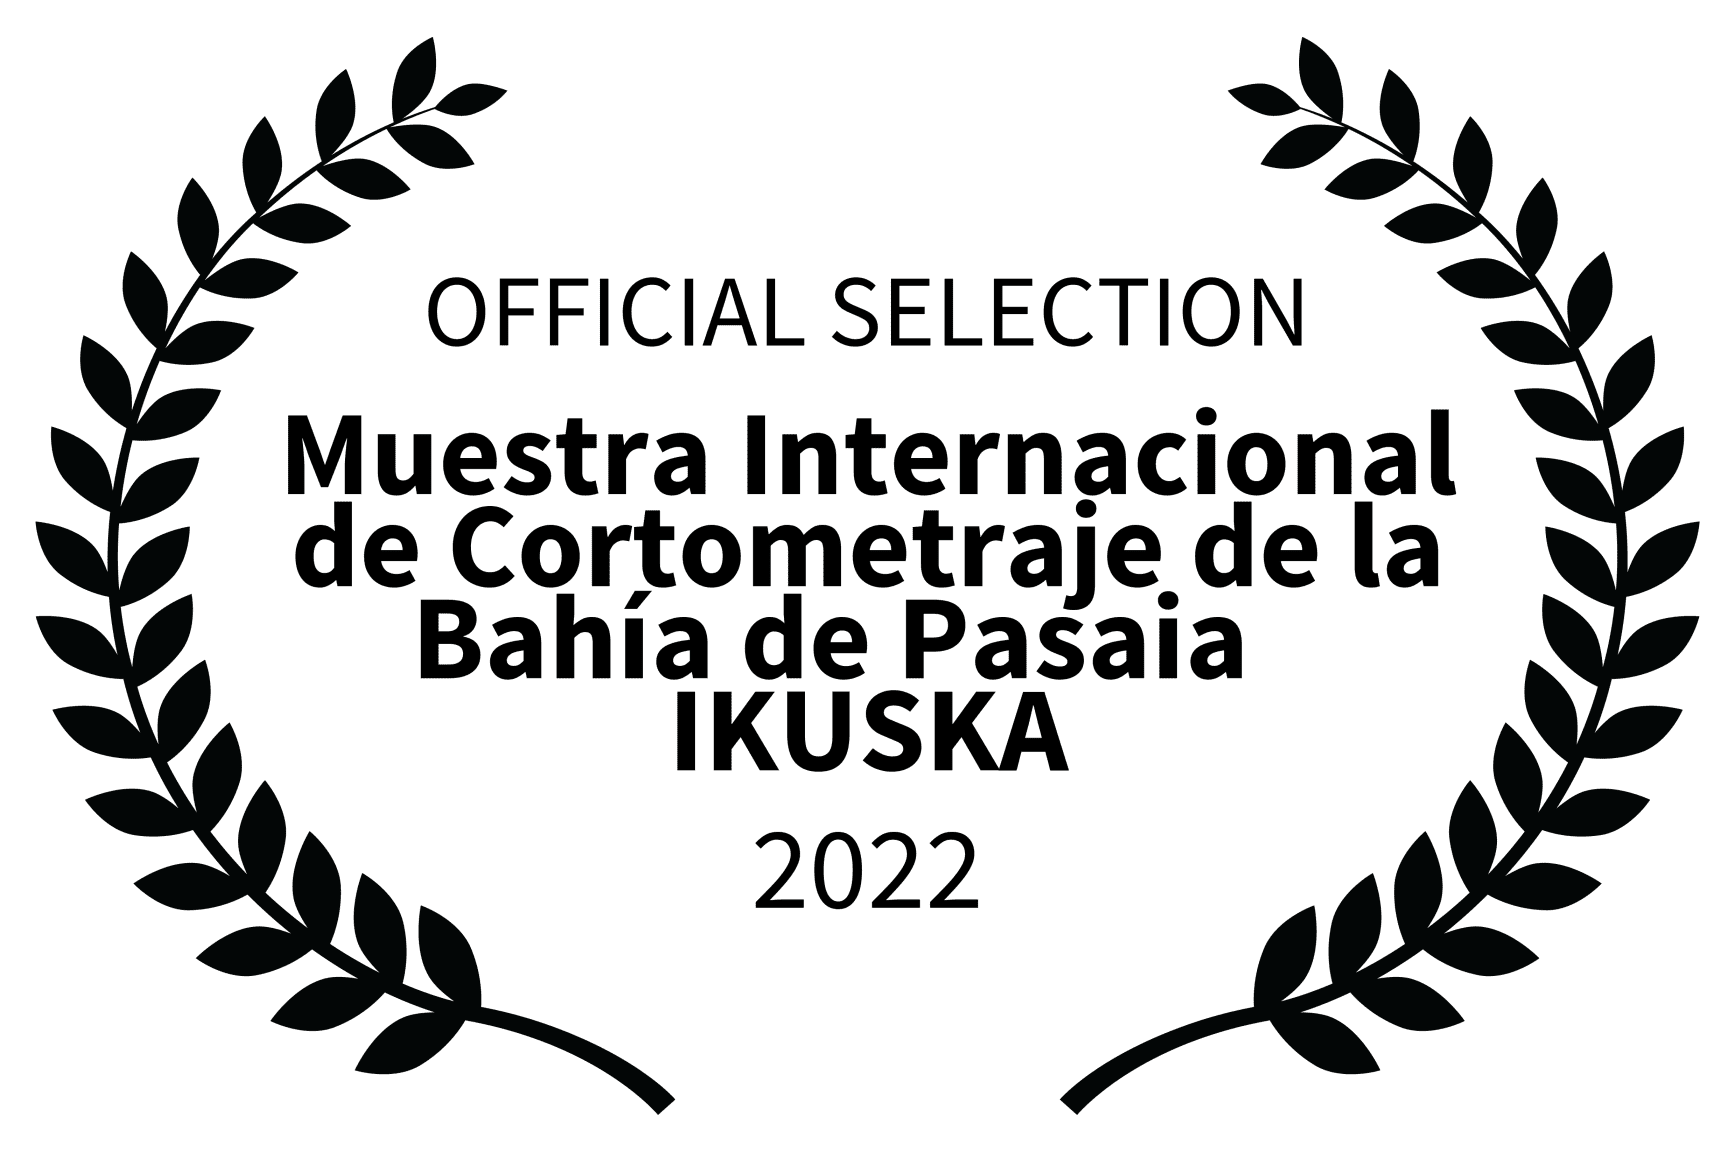 OFFICIAL SELECTION - Muestra Internacional de Cortometraje de la Baha de Pasaia IKUSKA - 2022